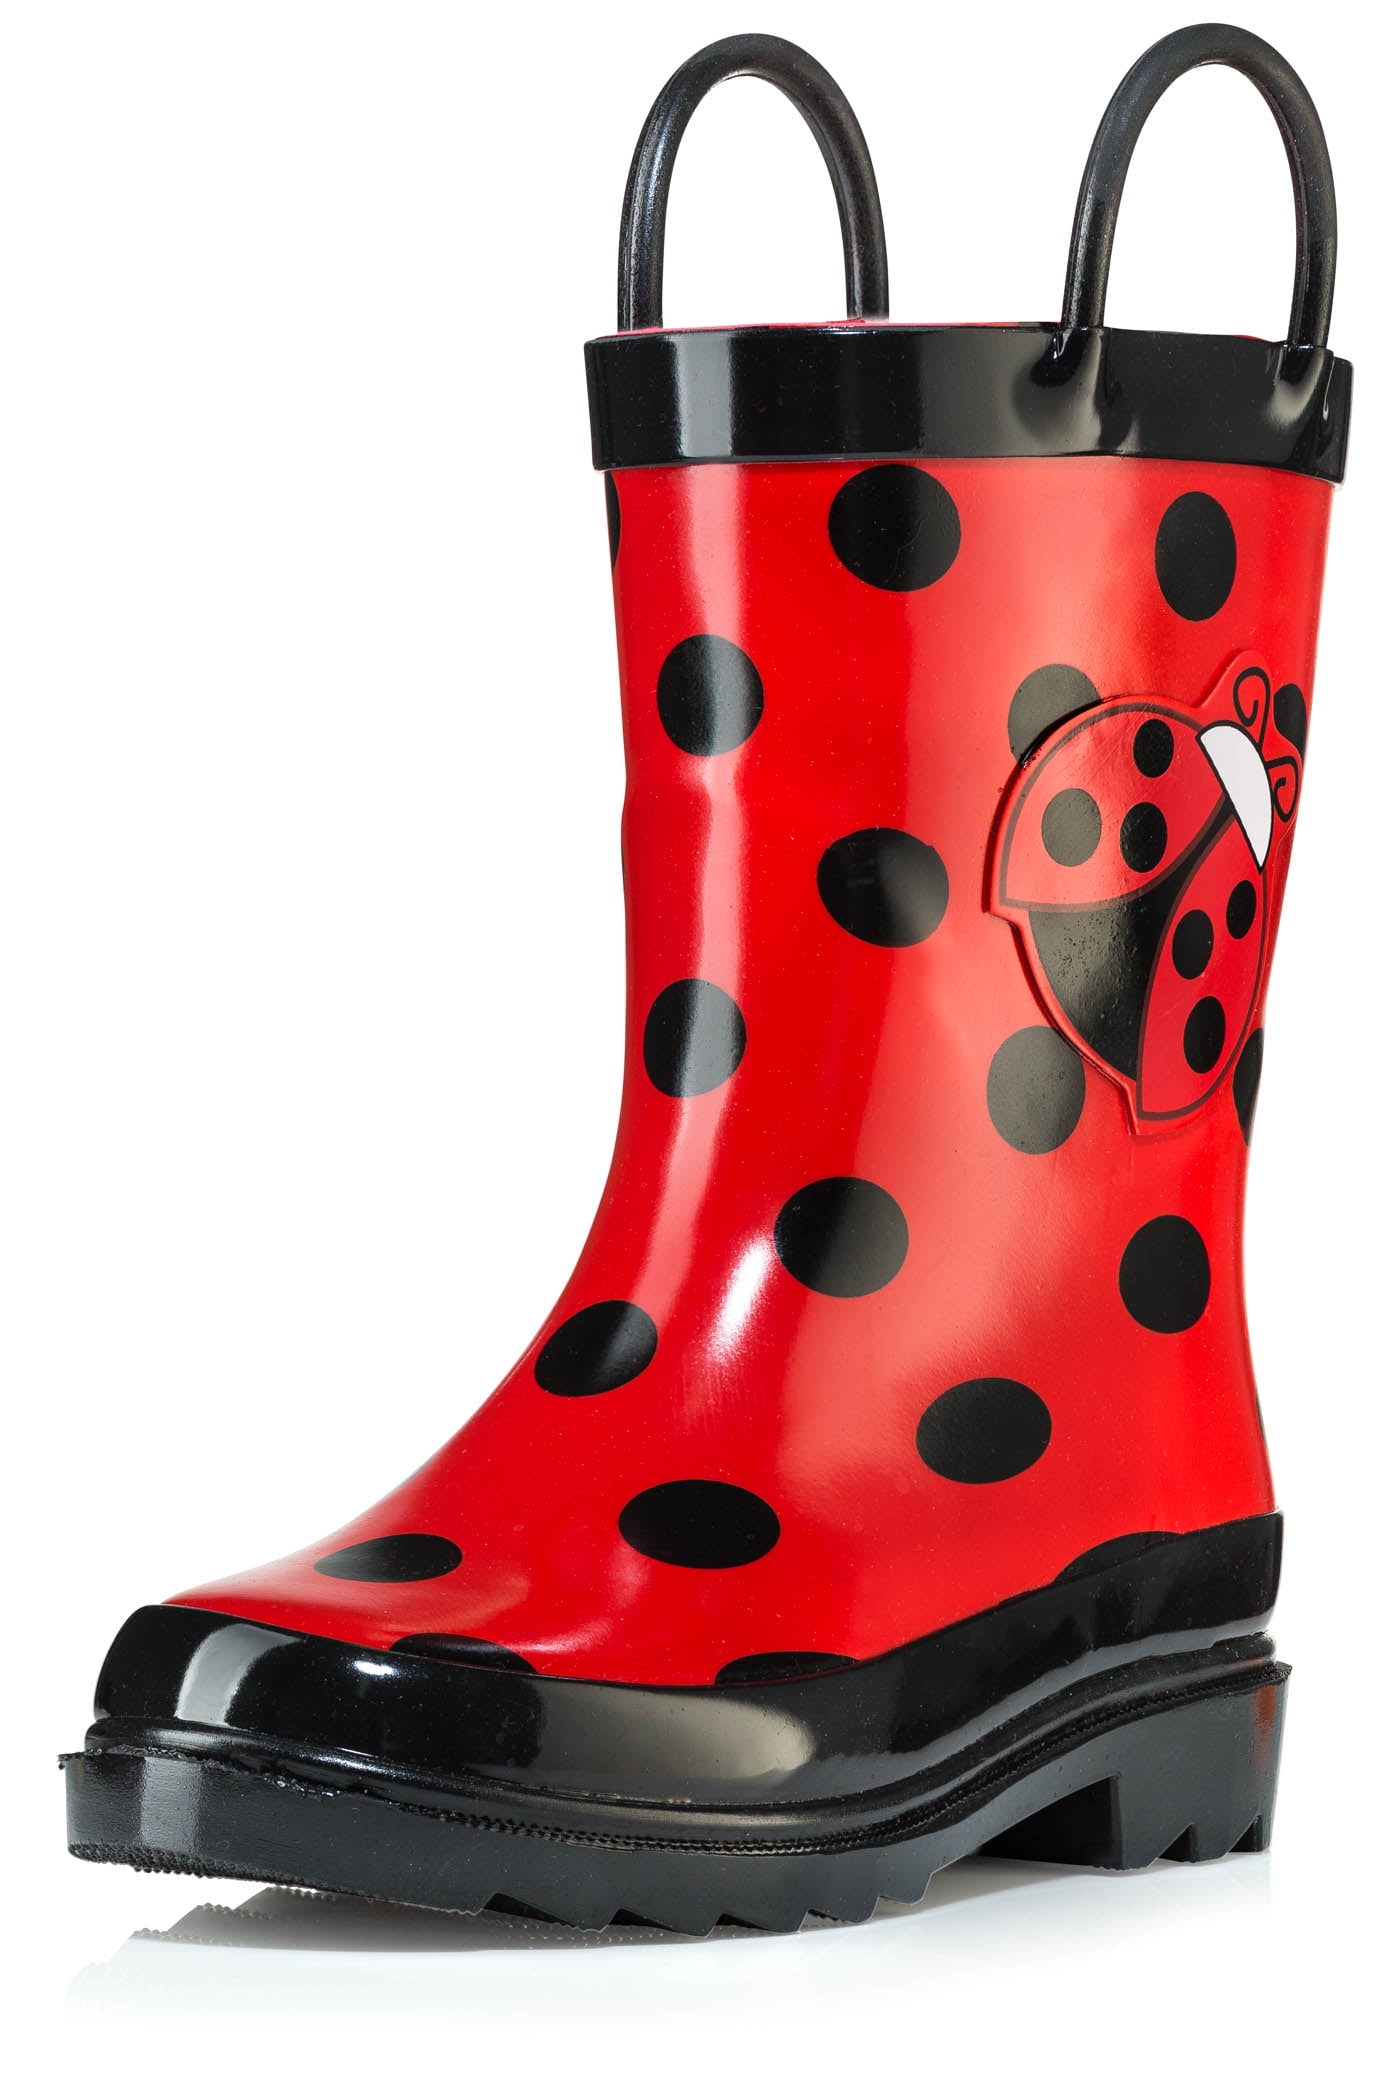 Little Girls Red Ladybug Rubber Rain Boots - Size 2 Little Kid 